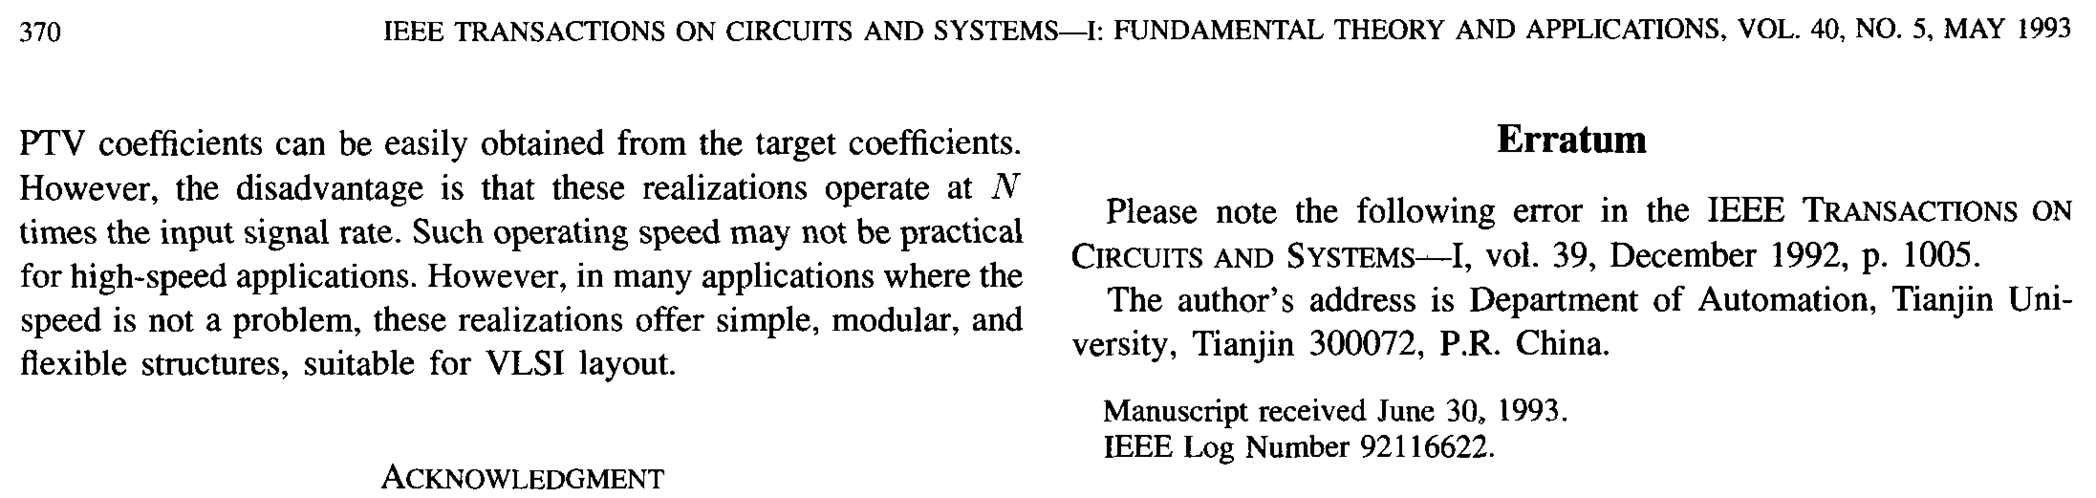 Erratum IEEE 1993, 40(5) page 370ͼ.jpg